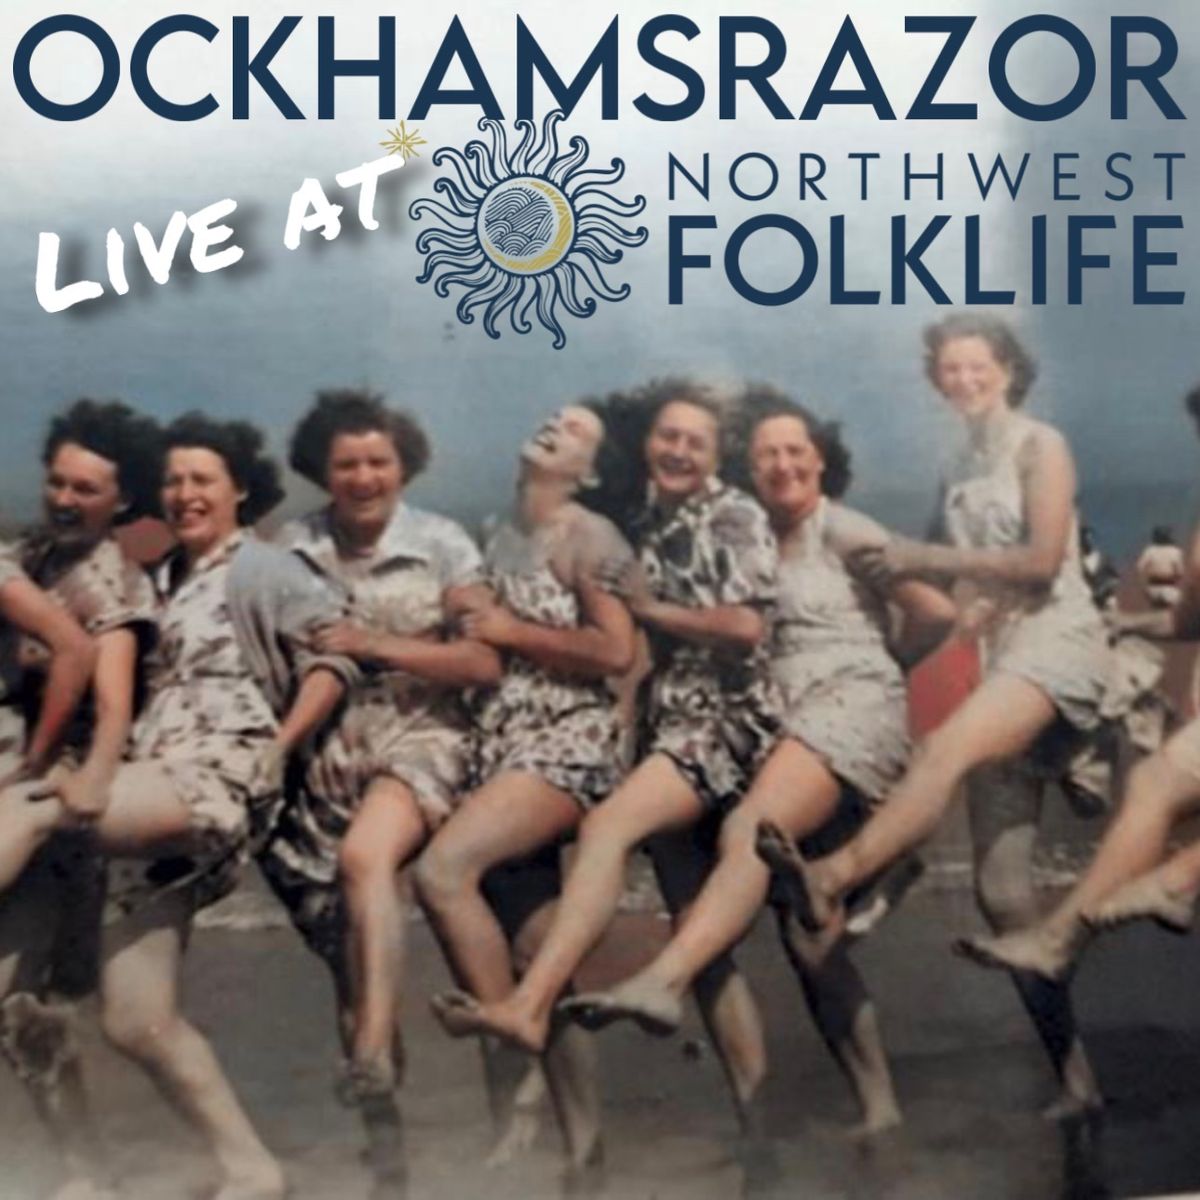 Ockhams Razor performs live at Northwest Folklife Festival